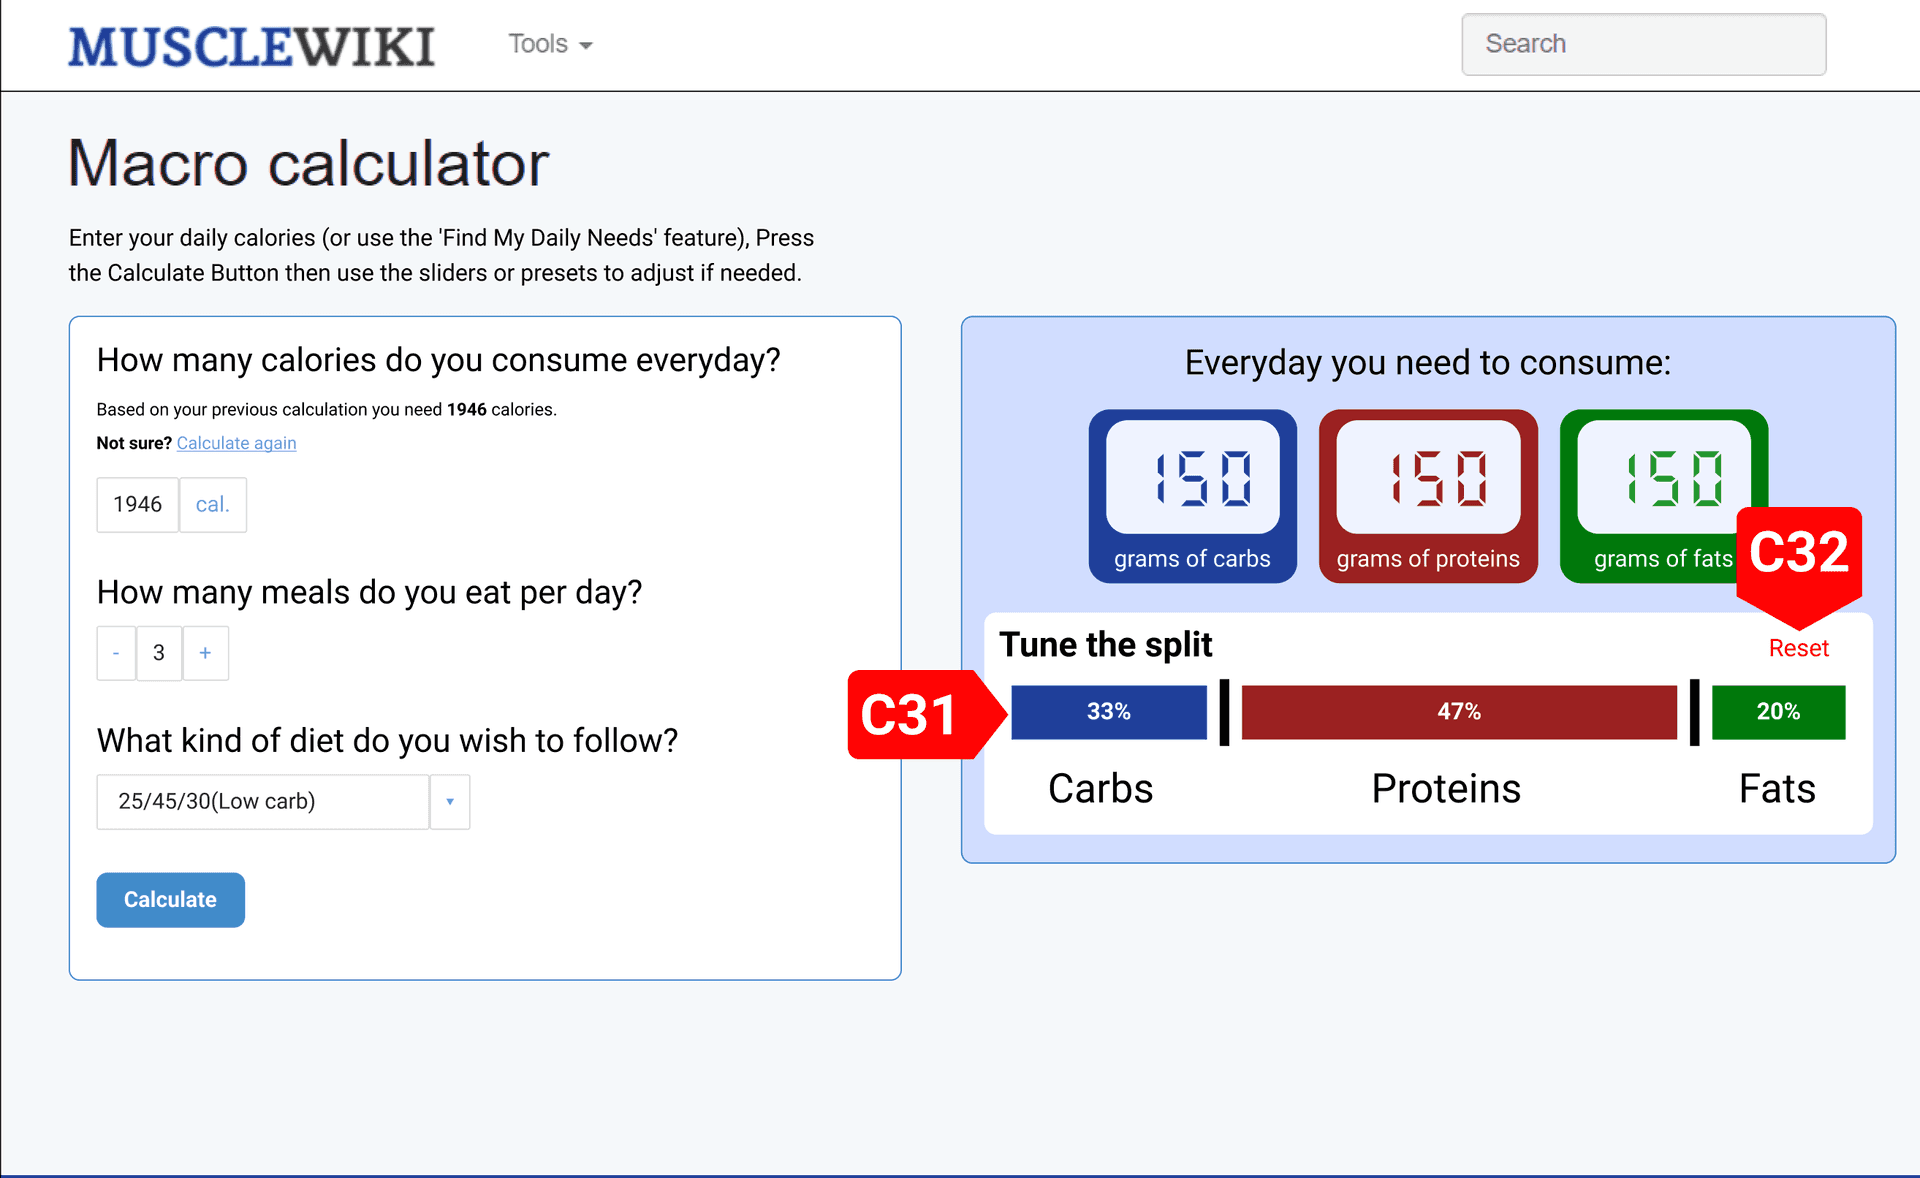 After: Make Macro Calculator more intuitive